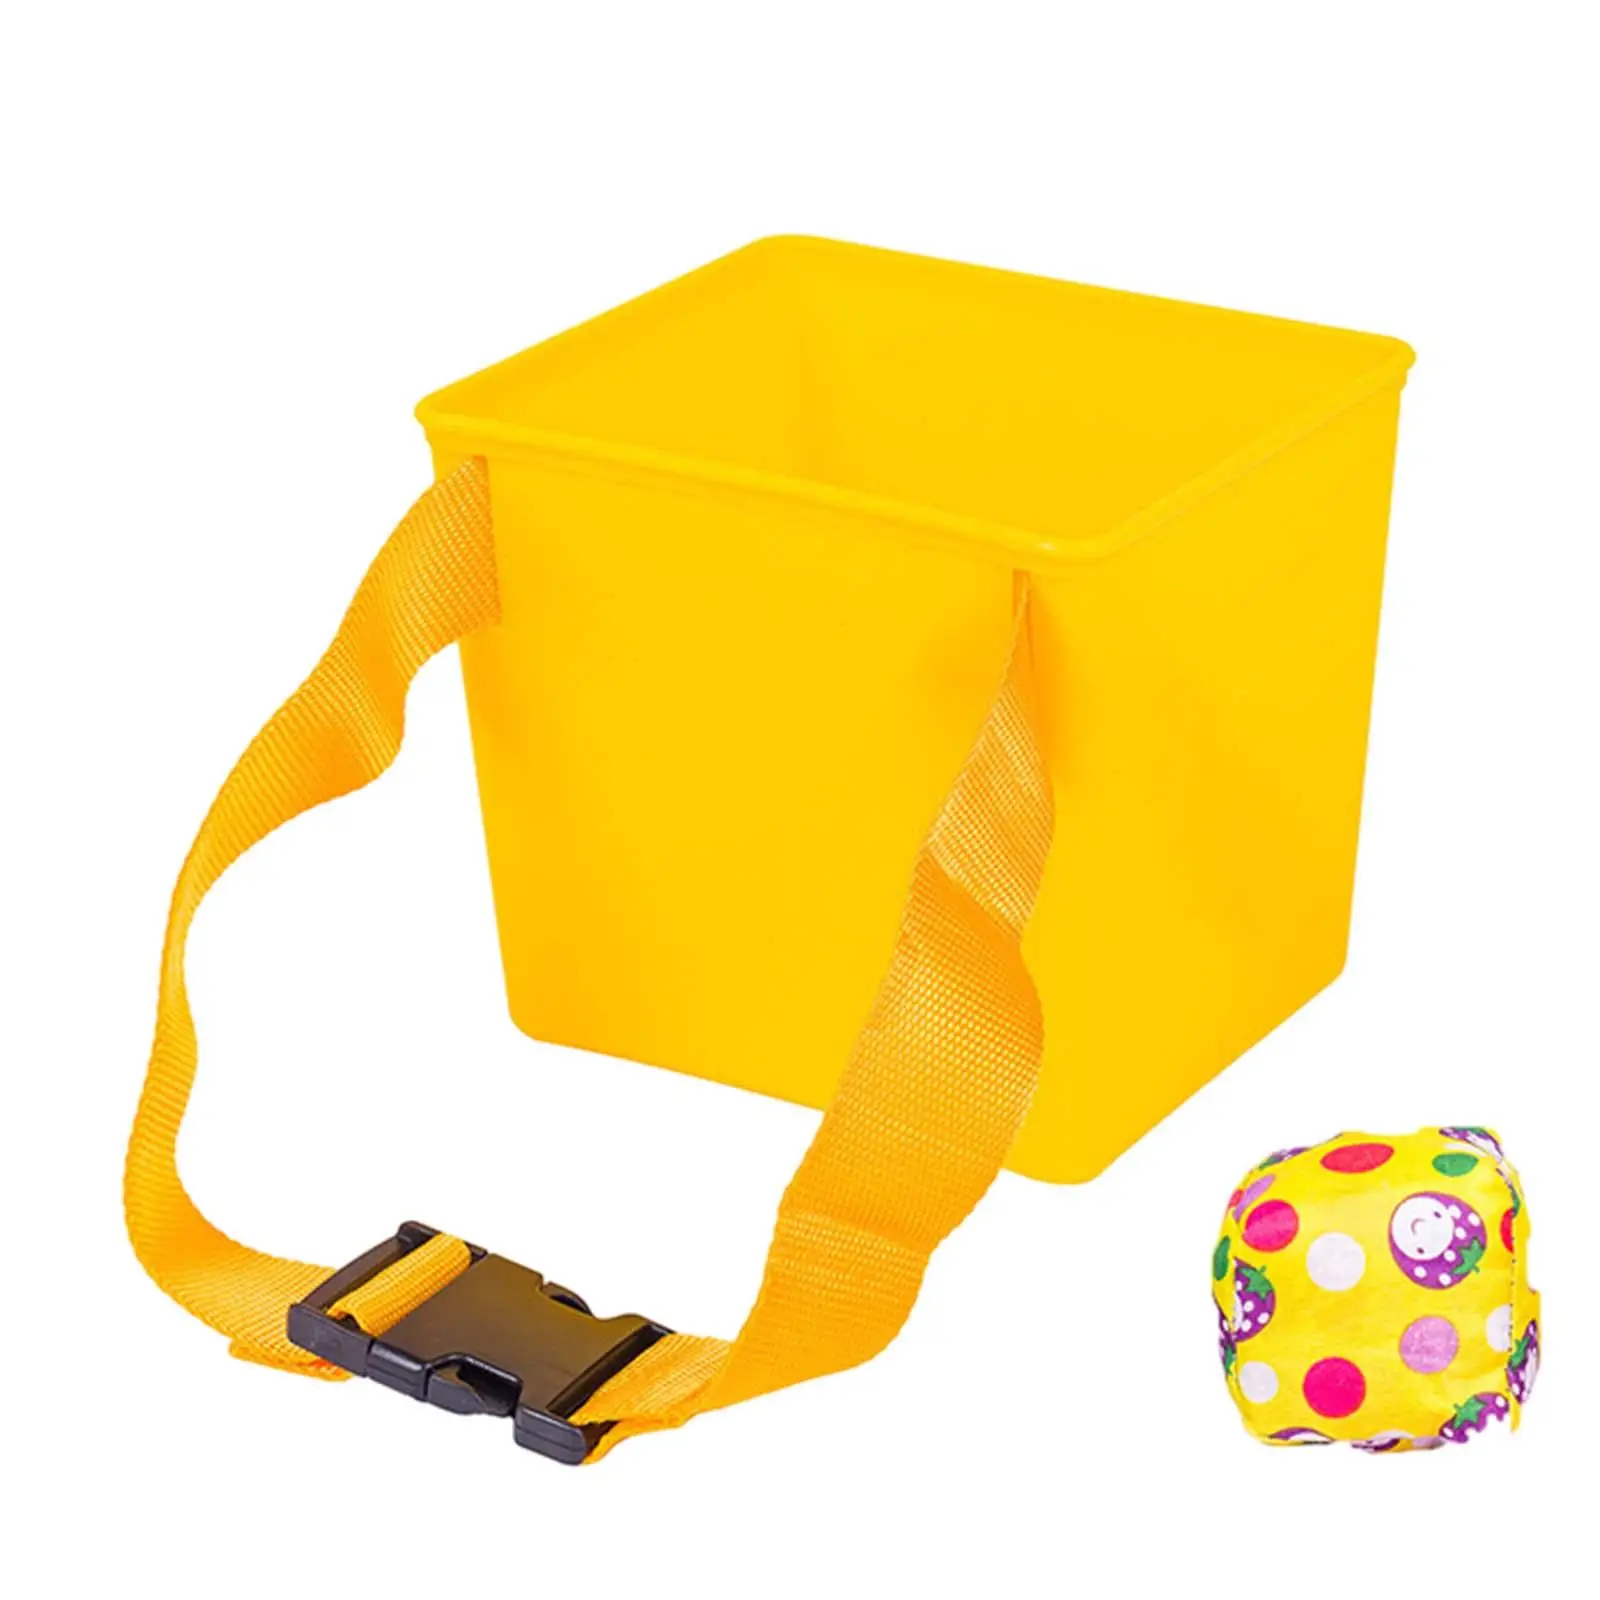 Throw Sandbag Sports Toss Game Sensory Training Kits Children Bucket Sports Toys for Party Backyard School Training Beach